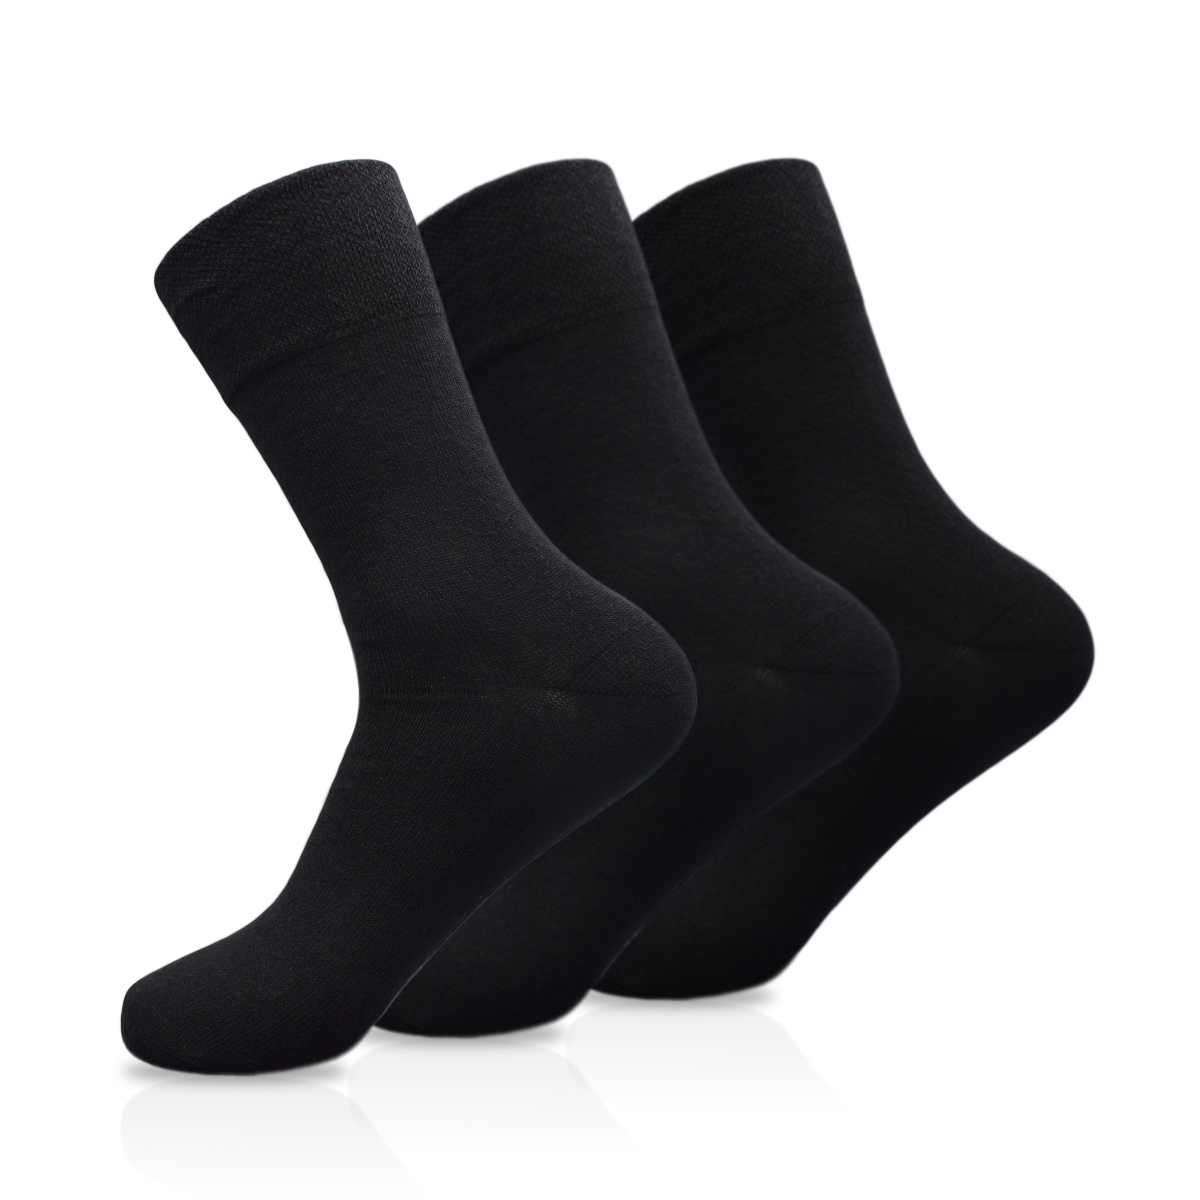 3x Pairs of Non Elastic Diabetic Socks for Men - Nuova Health